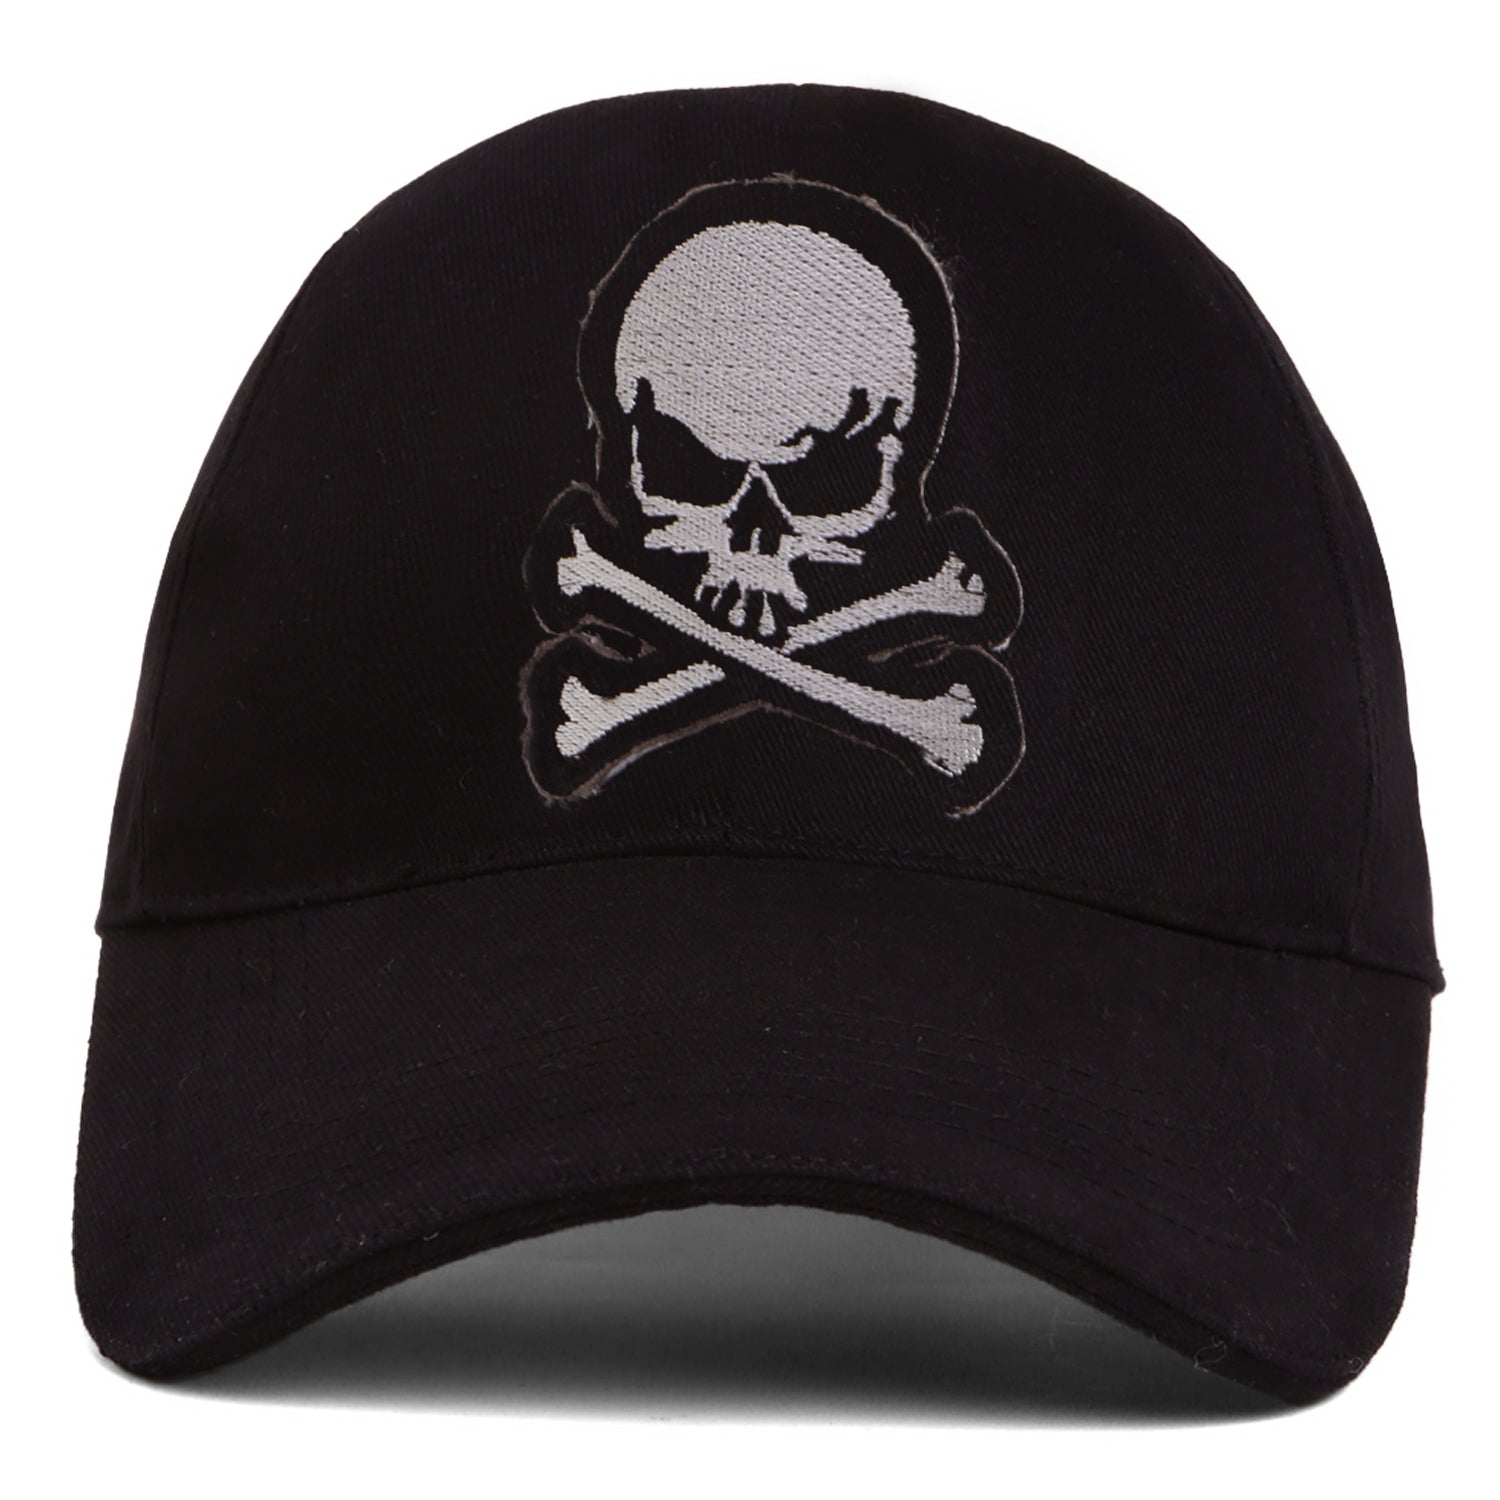 Punk Skull & Bones Black Cap